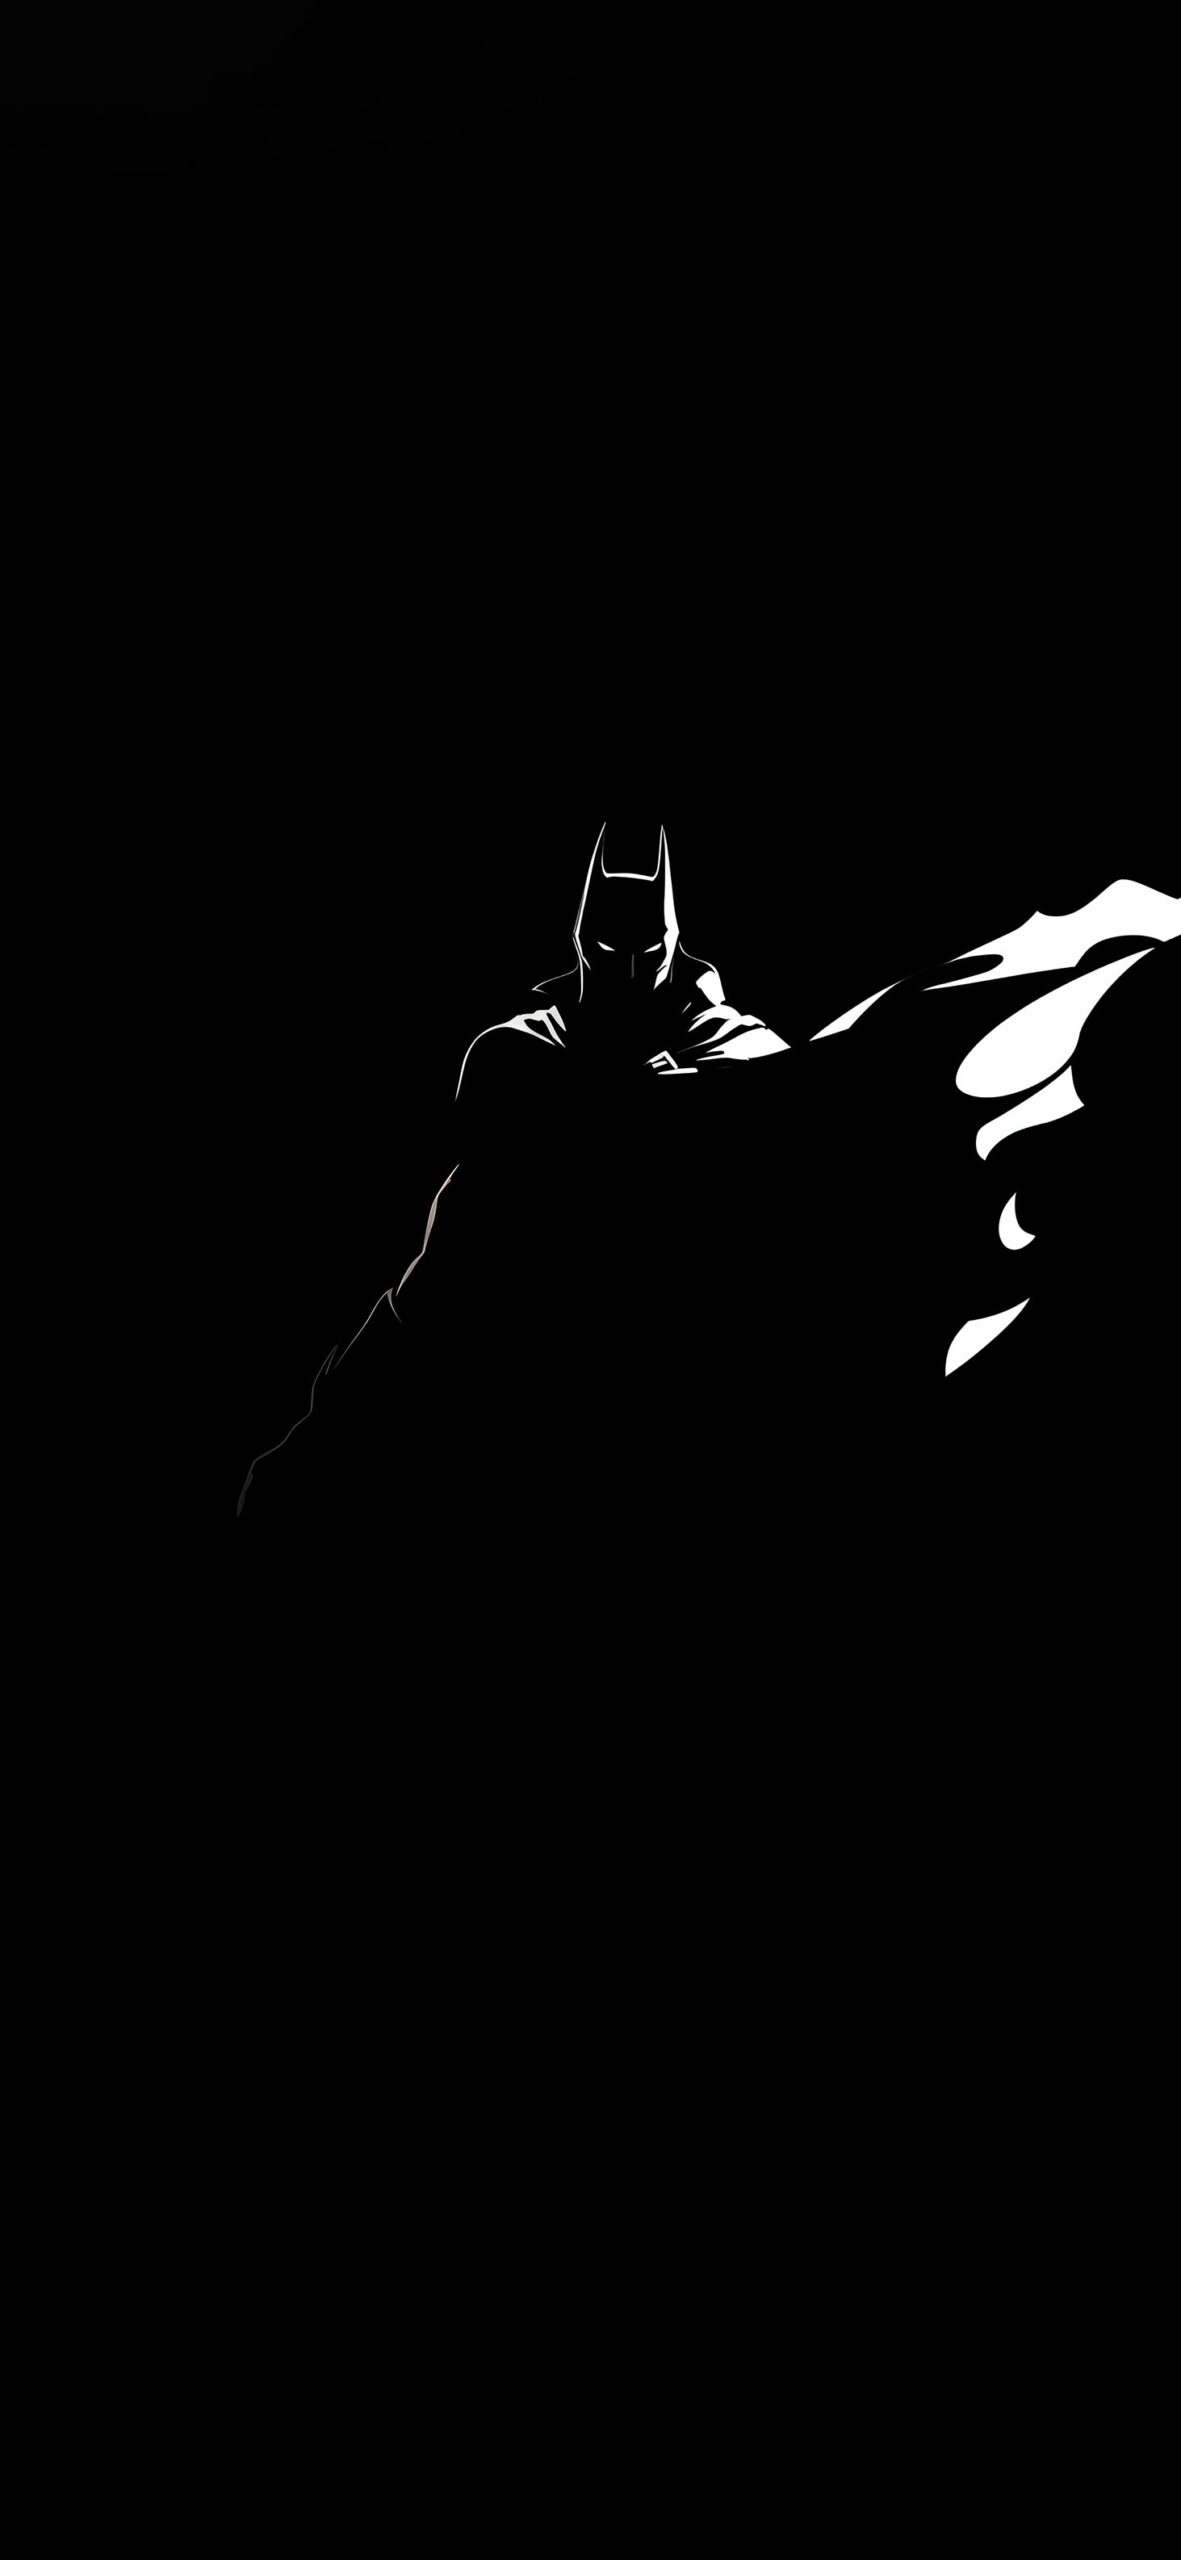 DC mysterious black & white batman silhouette wallpaper Cool c